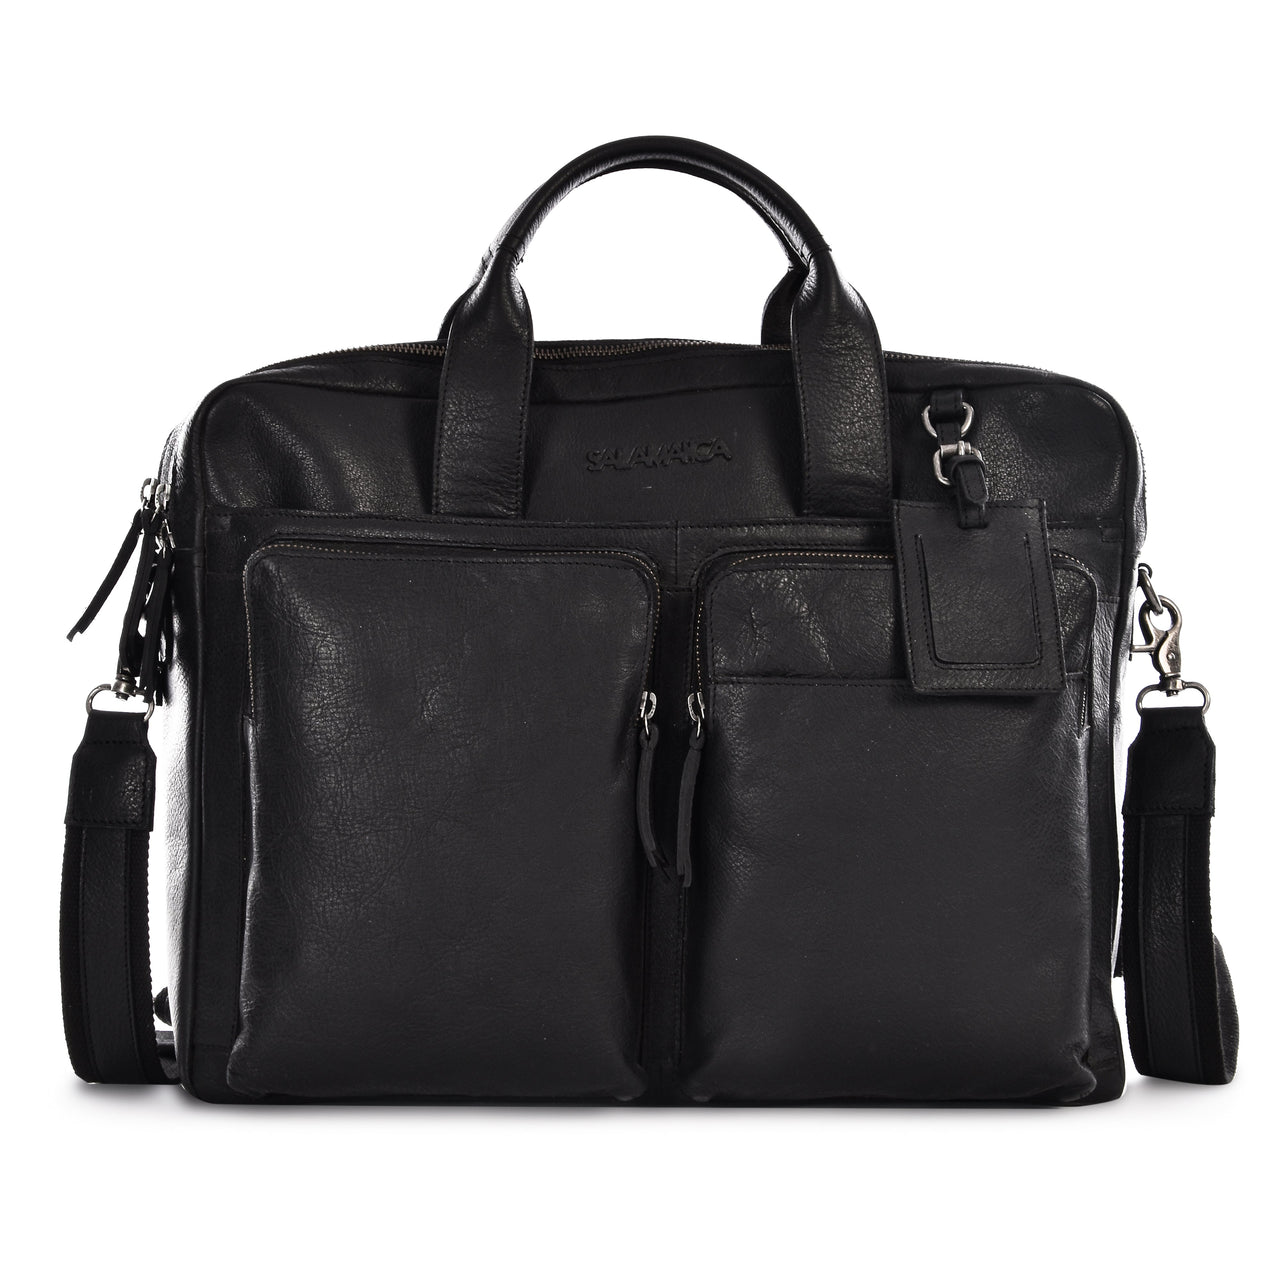 League Business Bag - Two Compartments - Verico Black - 